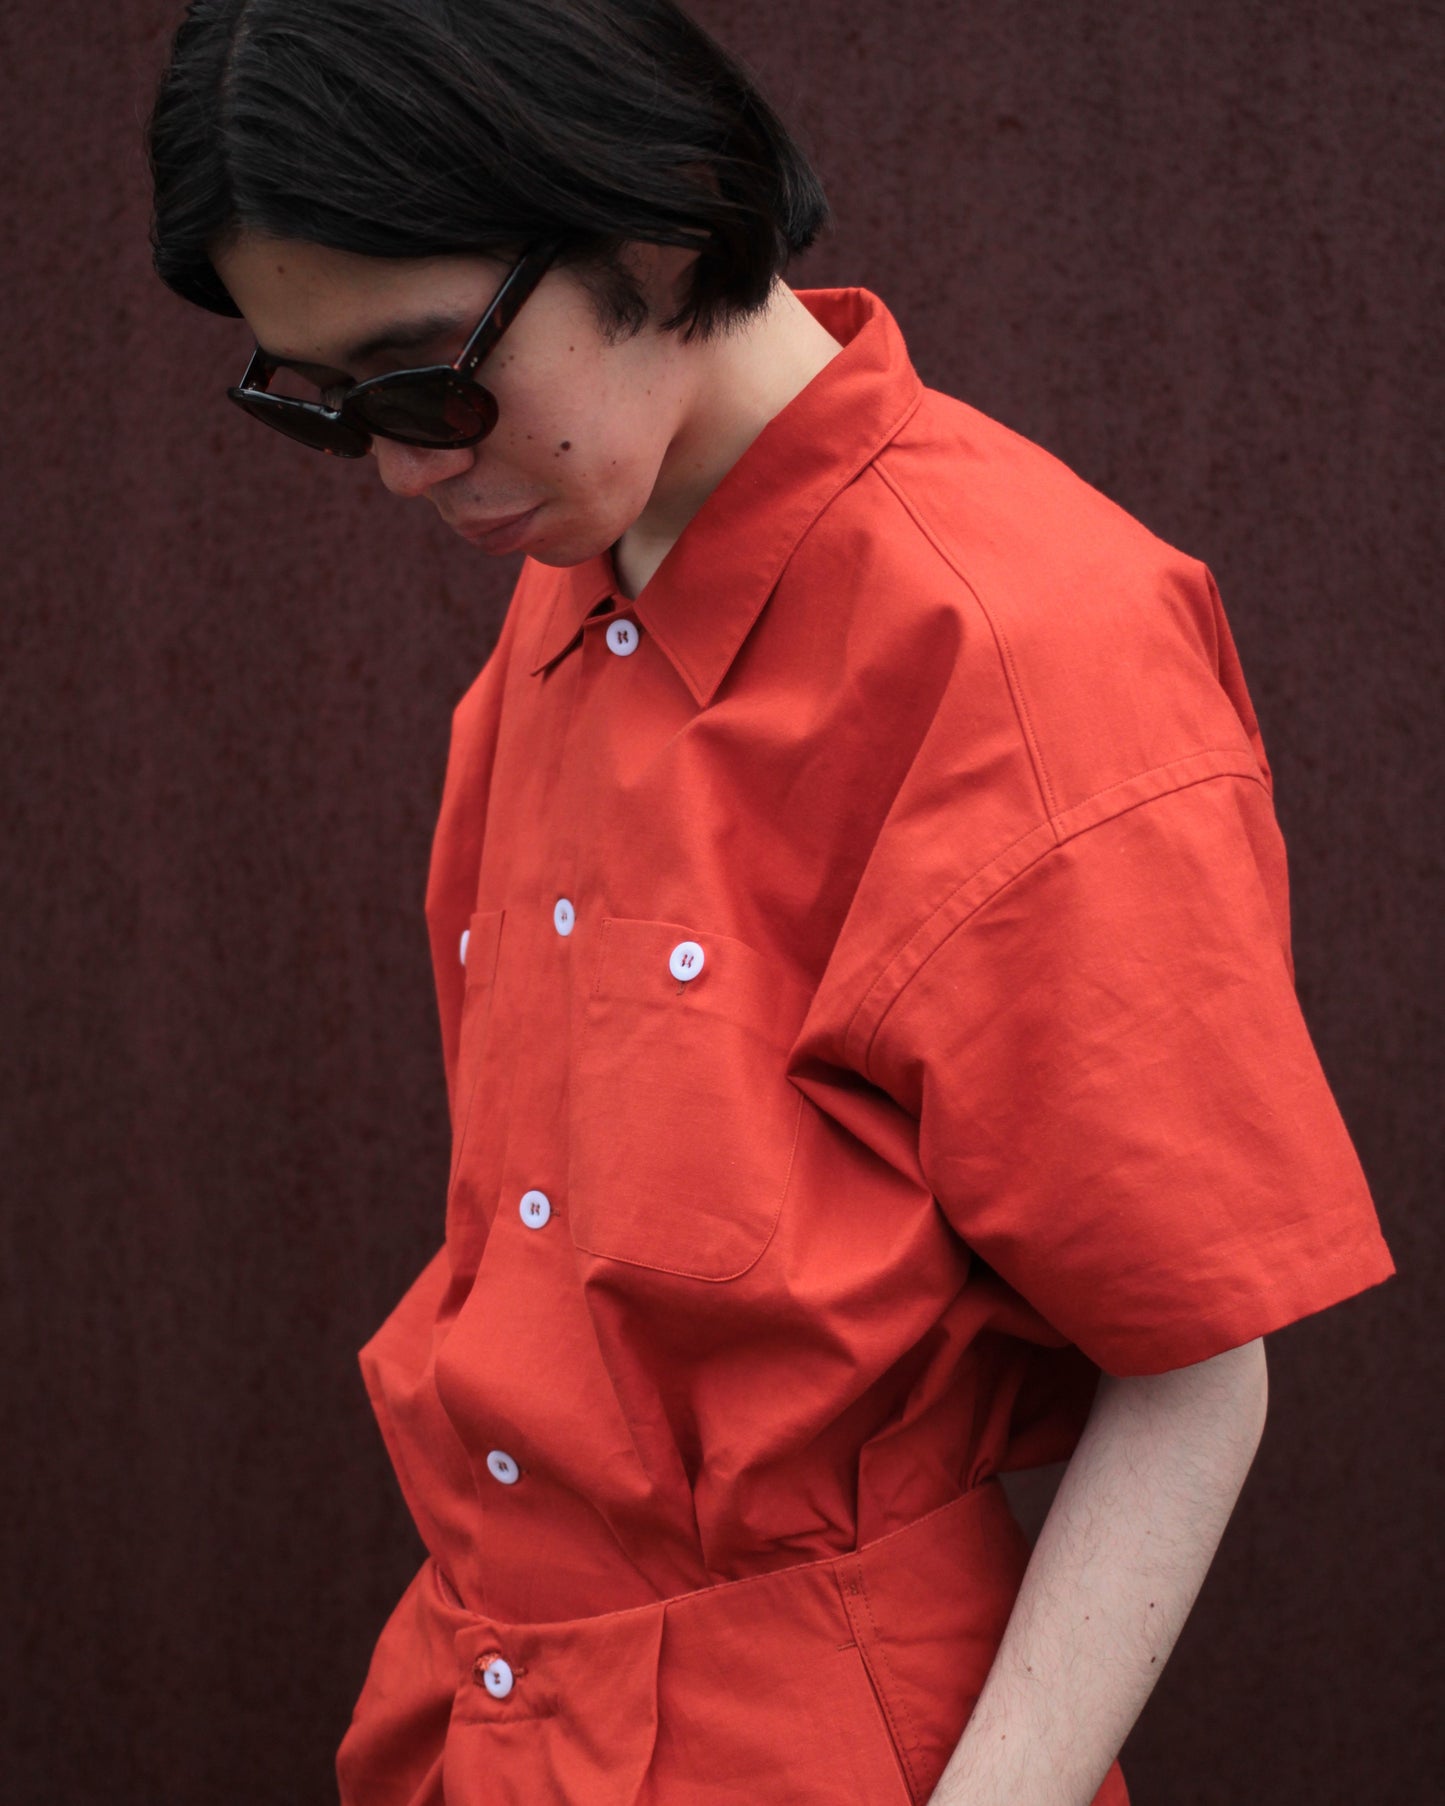 TUKI/blouse "Dull Orange"